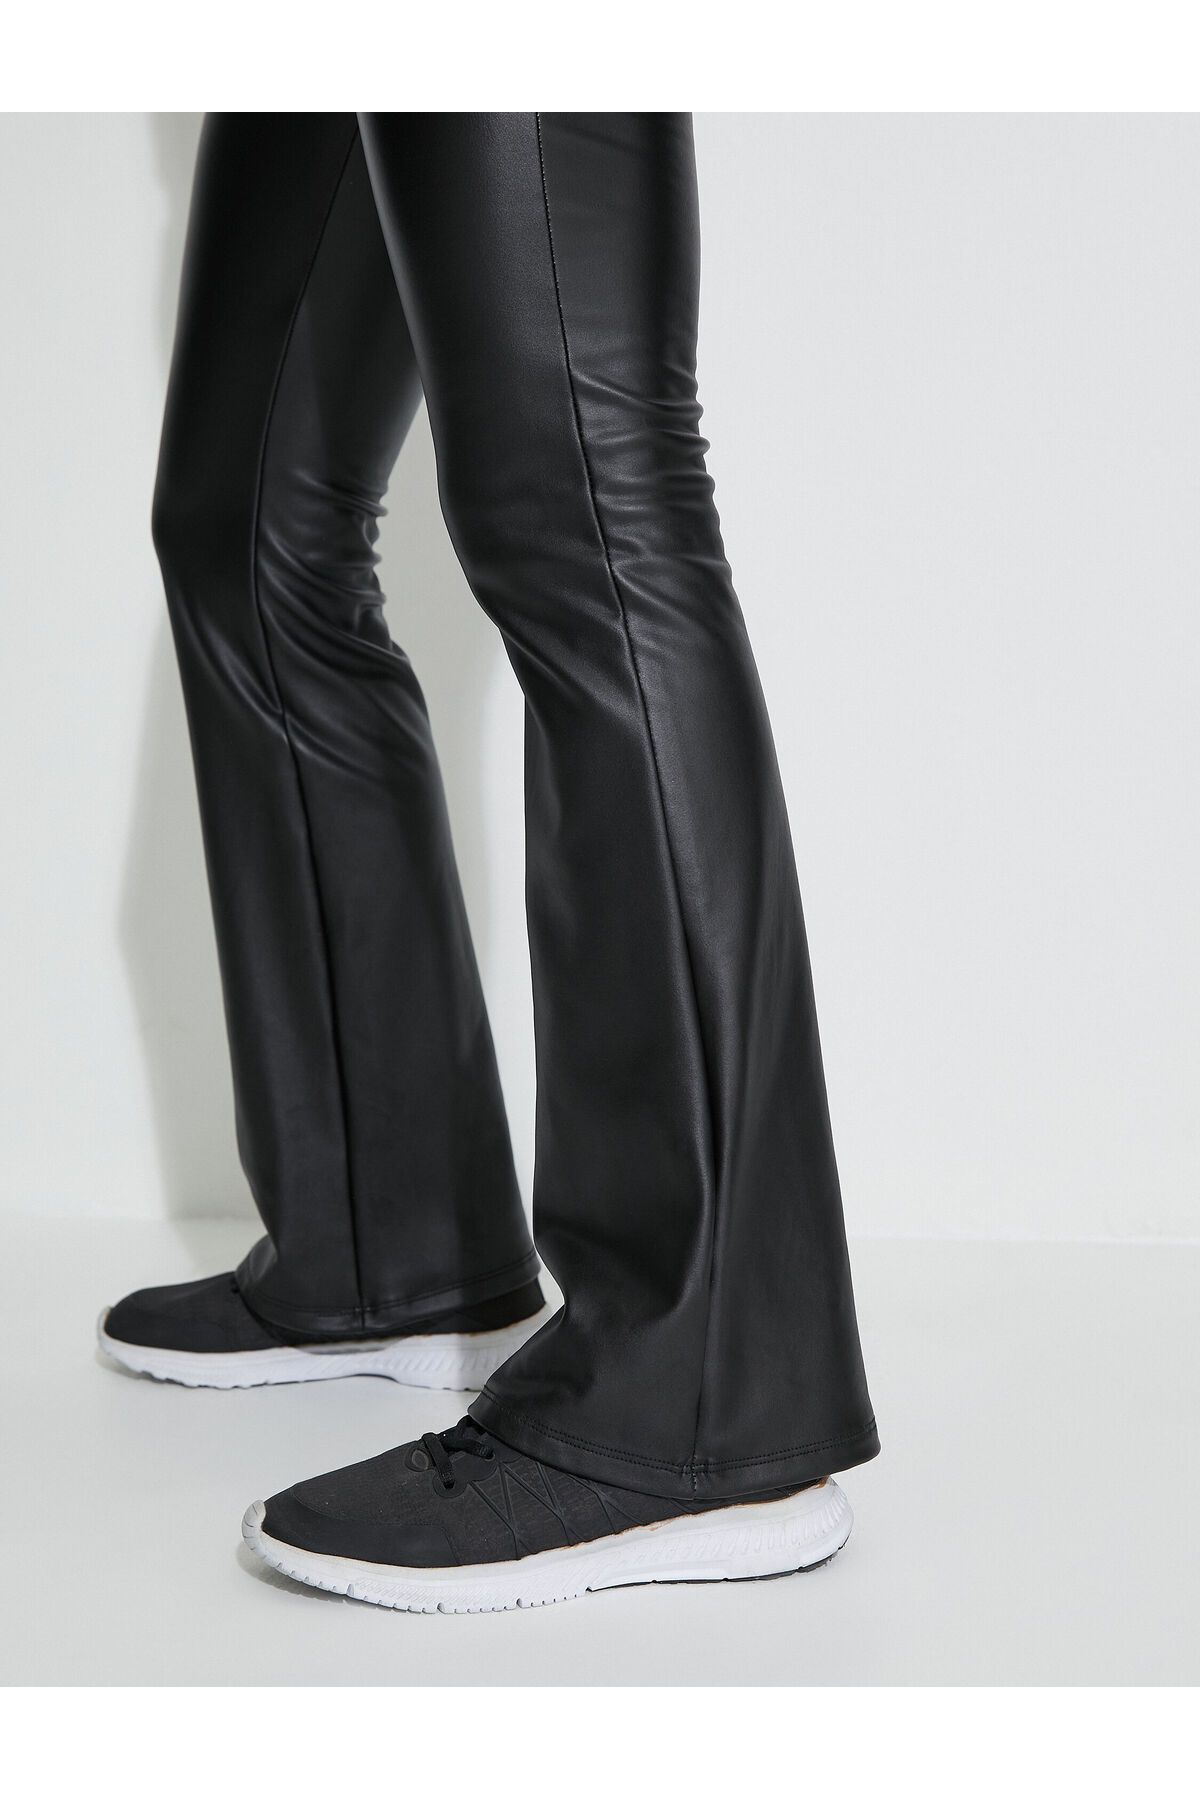 Topshop Petite faux leather leggings in black